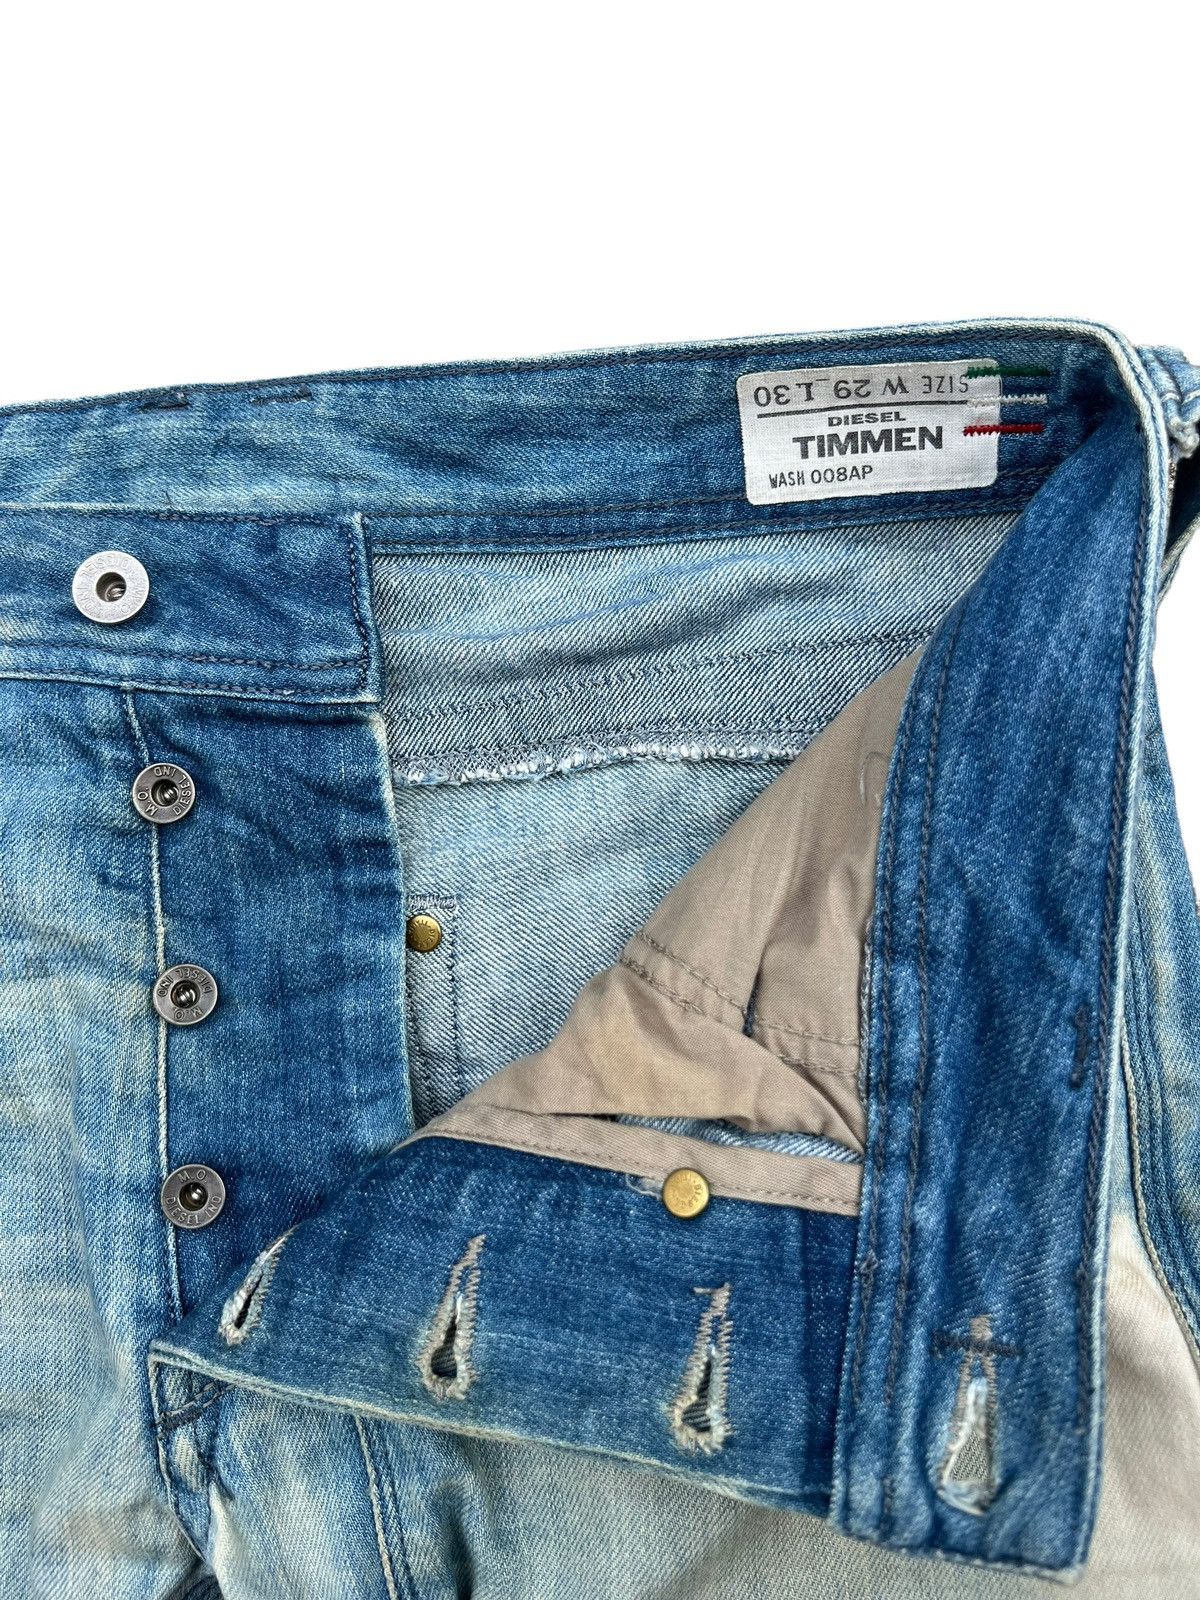 Vintage Diesel Leather Faded Distressed Denim Jeans 32x31 - 9